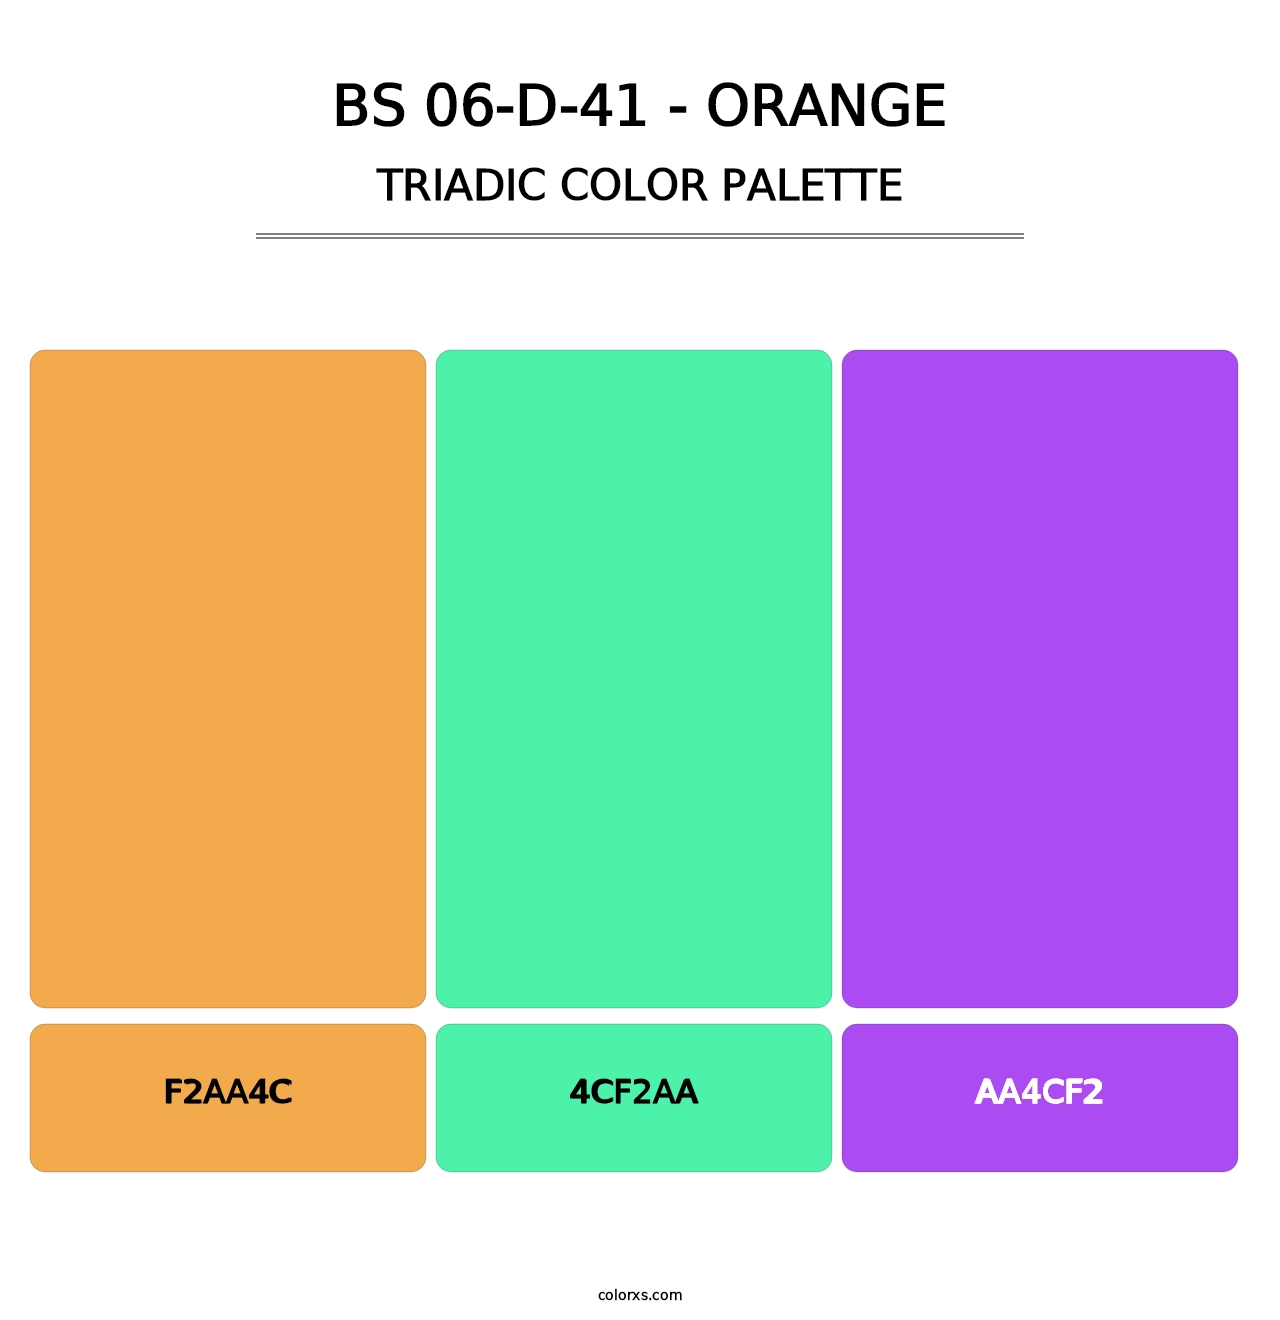 BS 06-D-41 - Orange - Triadic Color Palette